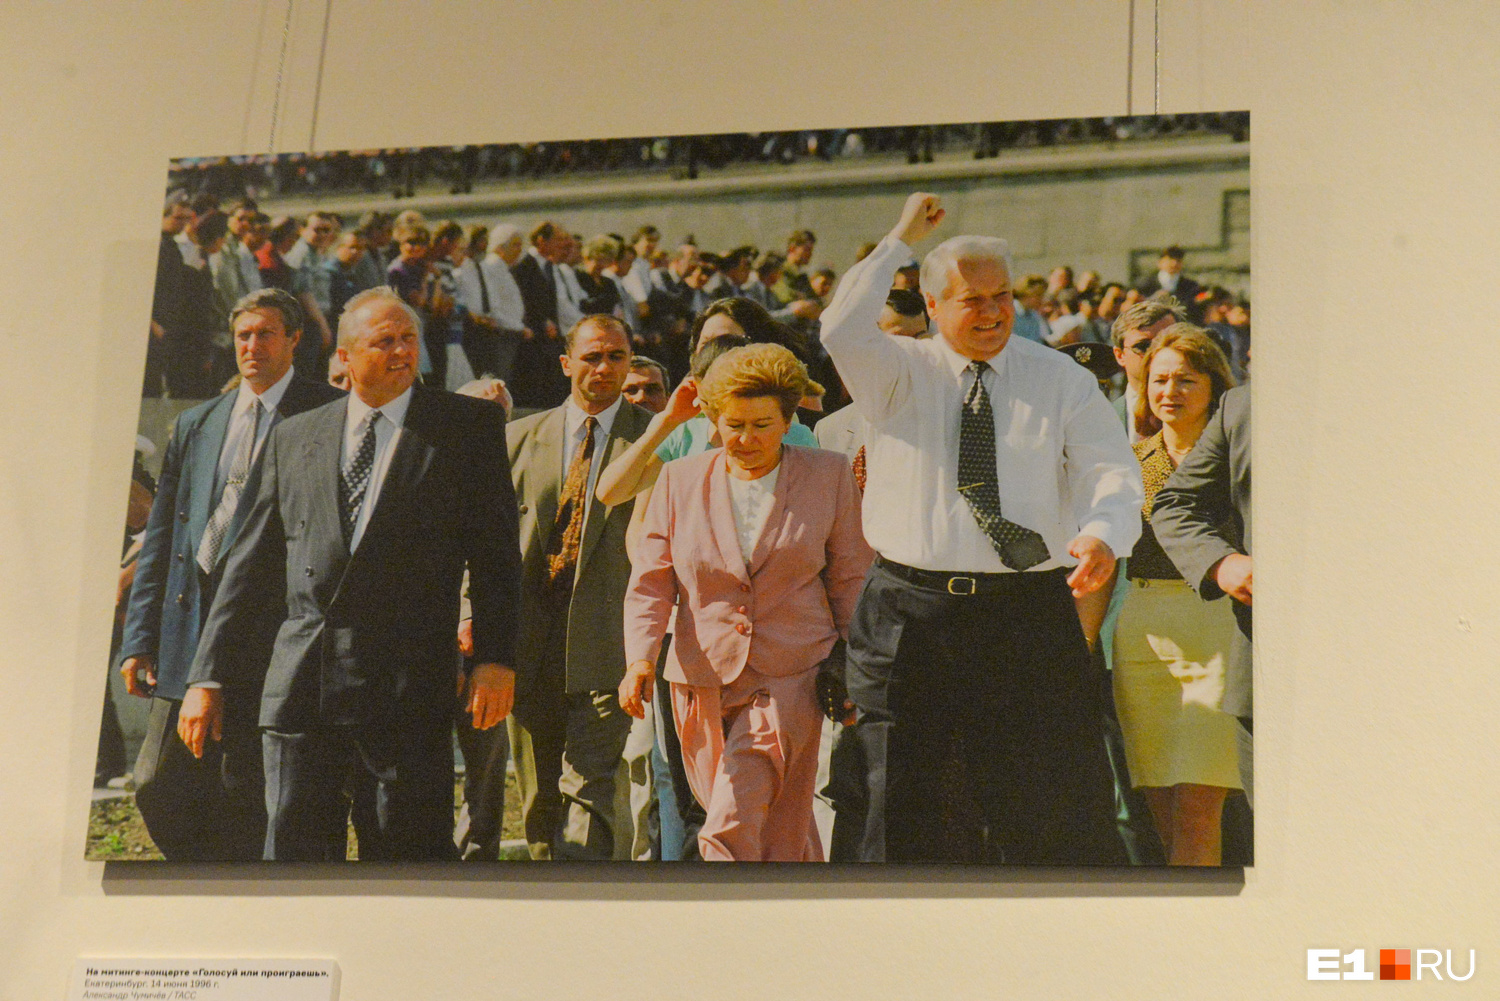 Фото Бориса Ельцина с выставки Эдуарда Росселя